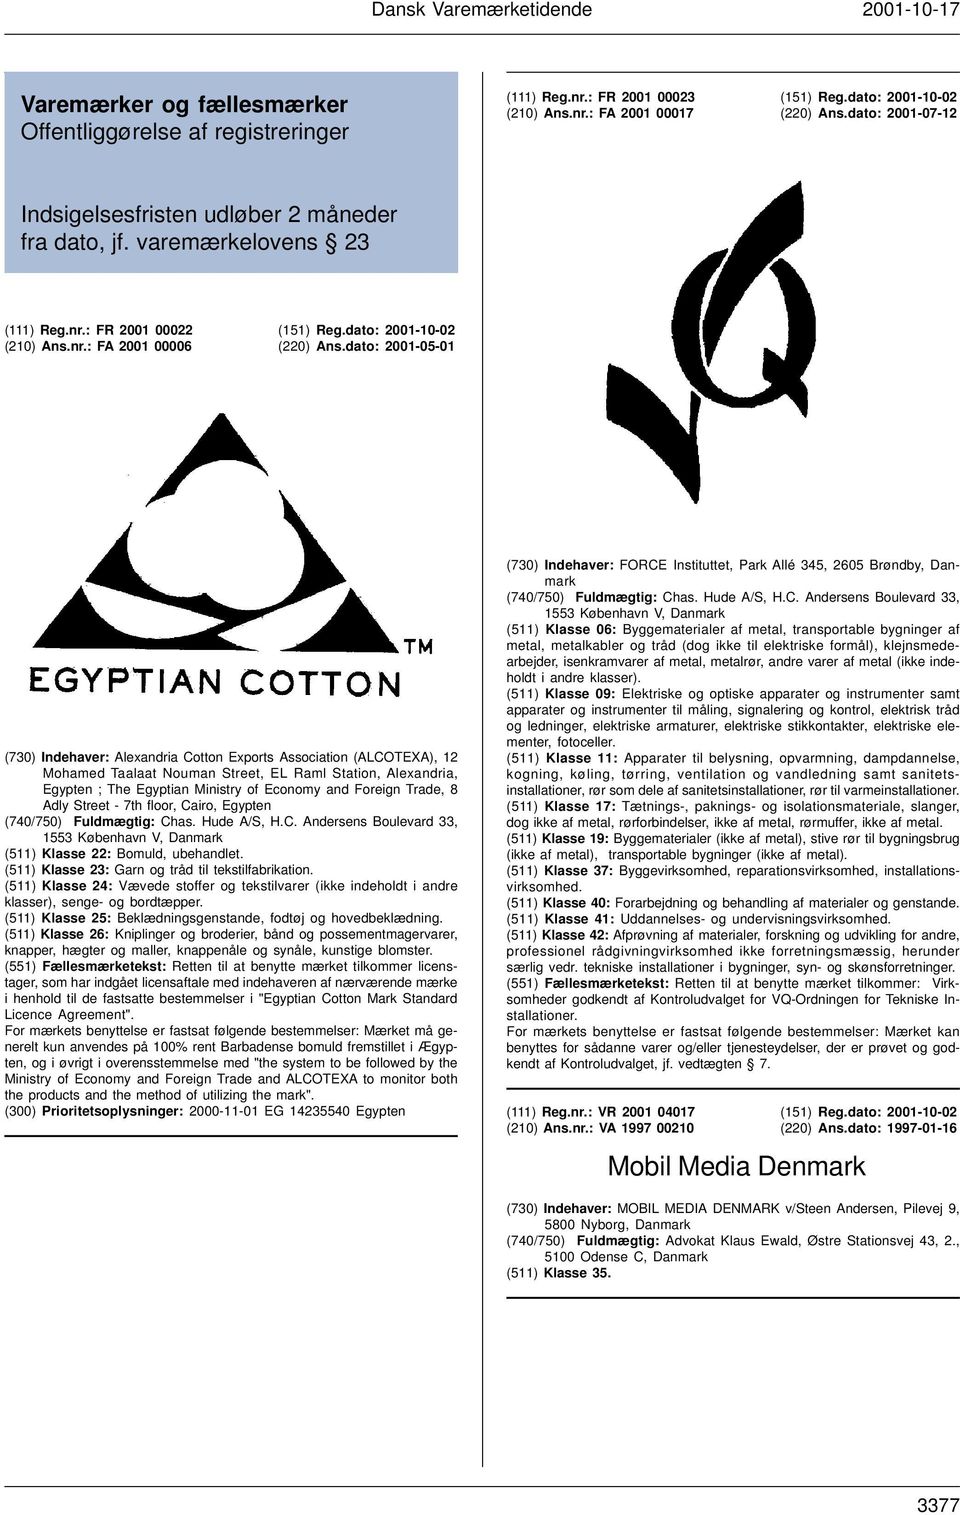 dato: 2001-05-01 (730) Indehaver: Alexandria Cotton Exports Association (ALCOTEXA), 12 Mohamed Taalaat Nouman Street, EL Raml Station, Alexandria, Egypten ; The Egyptian Ministry of Economy and